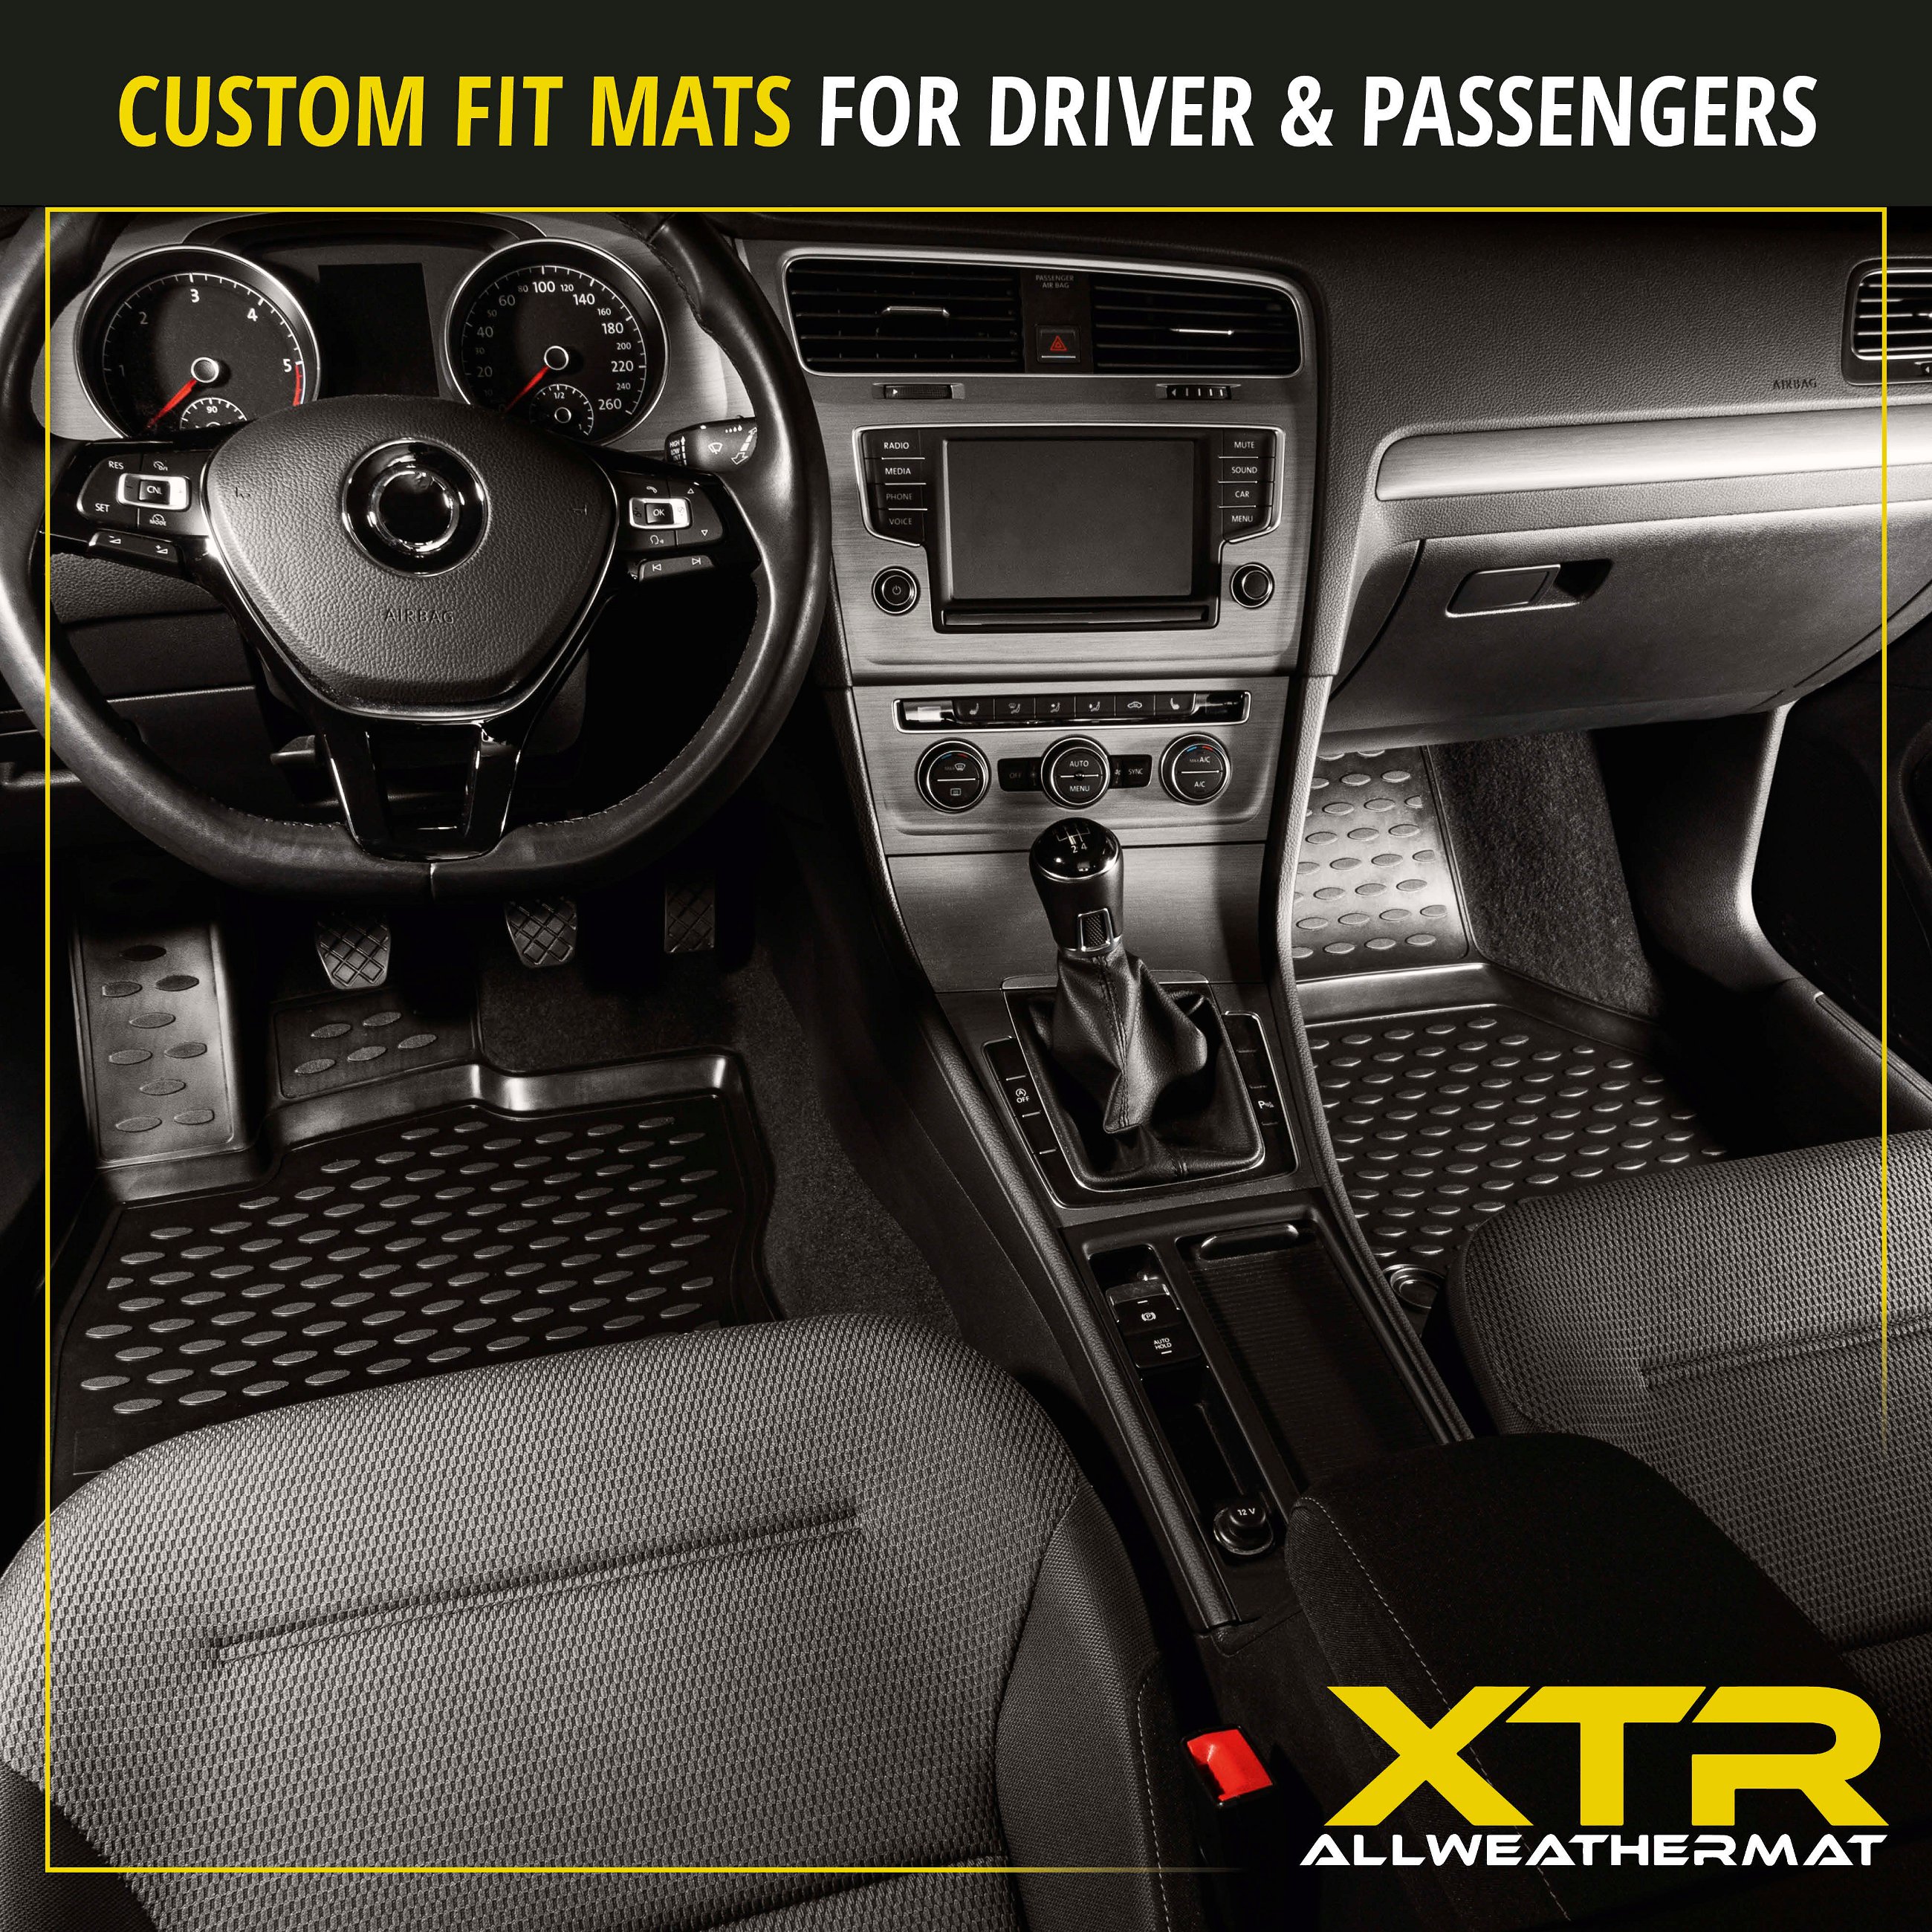 XTR Rubber Mats for Ford Fiesta VI hatchback 06/2008 - 2017